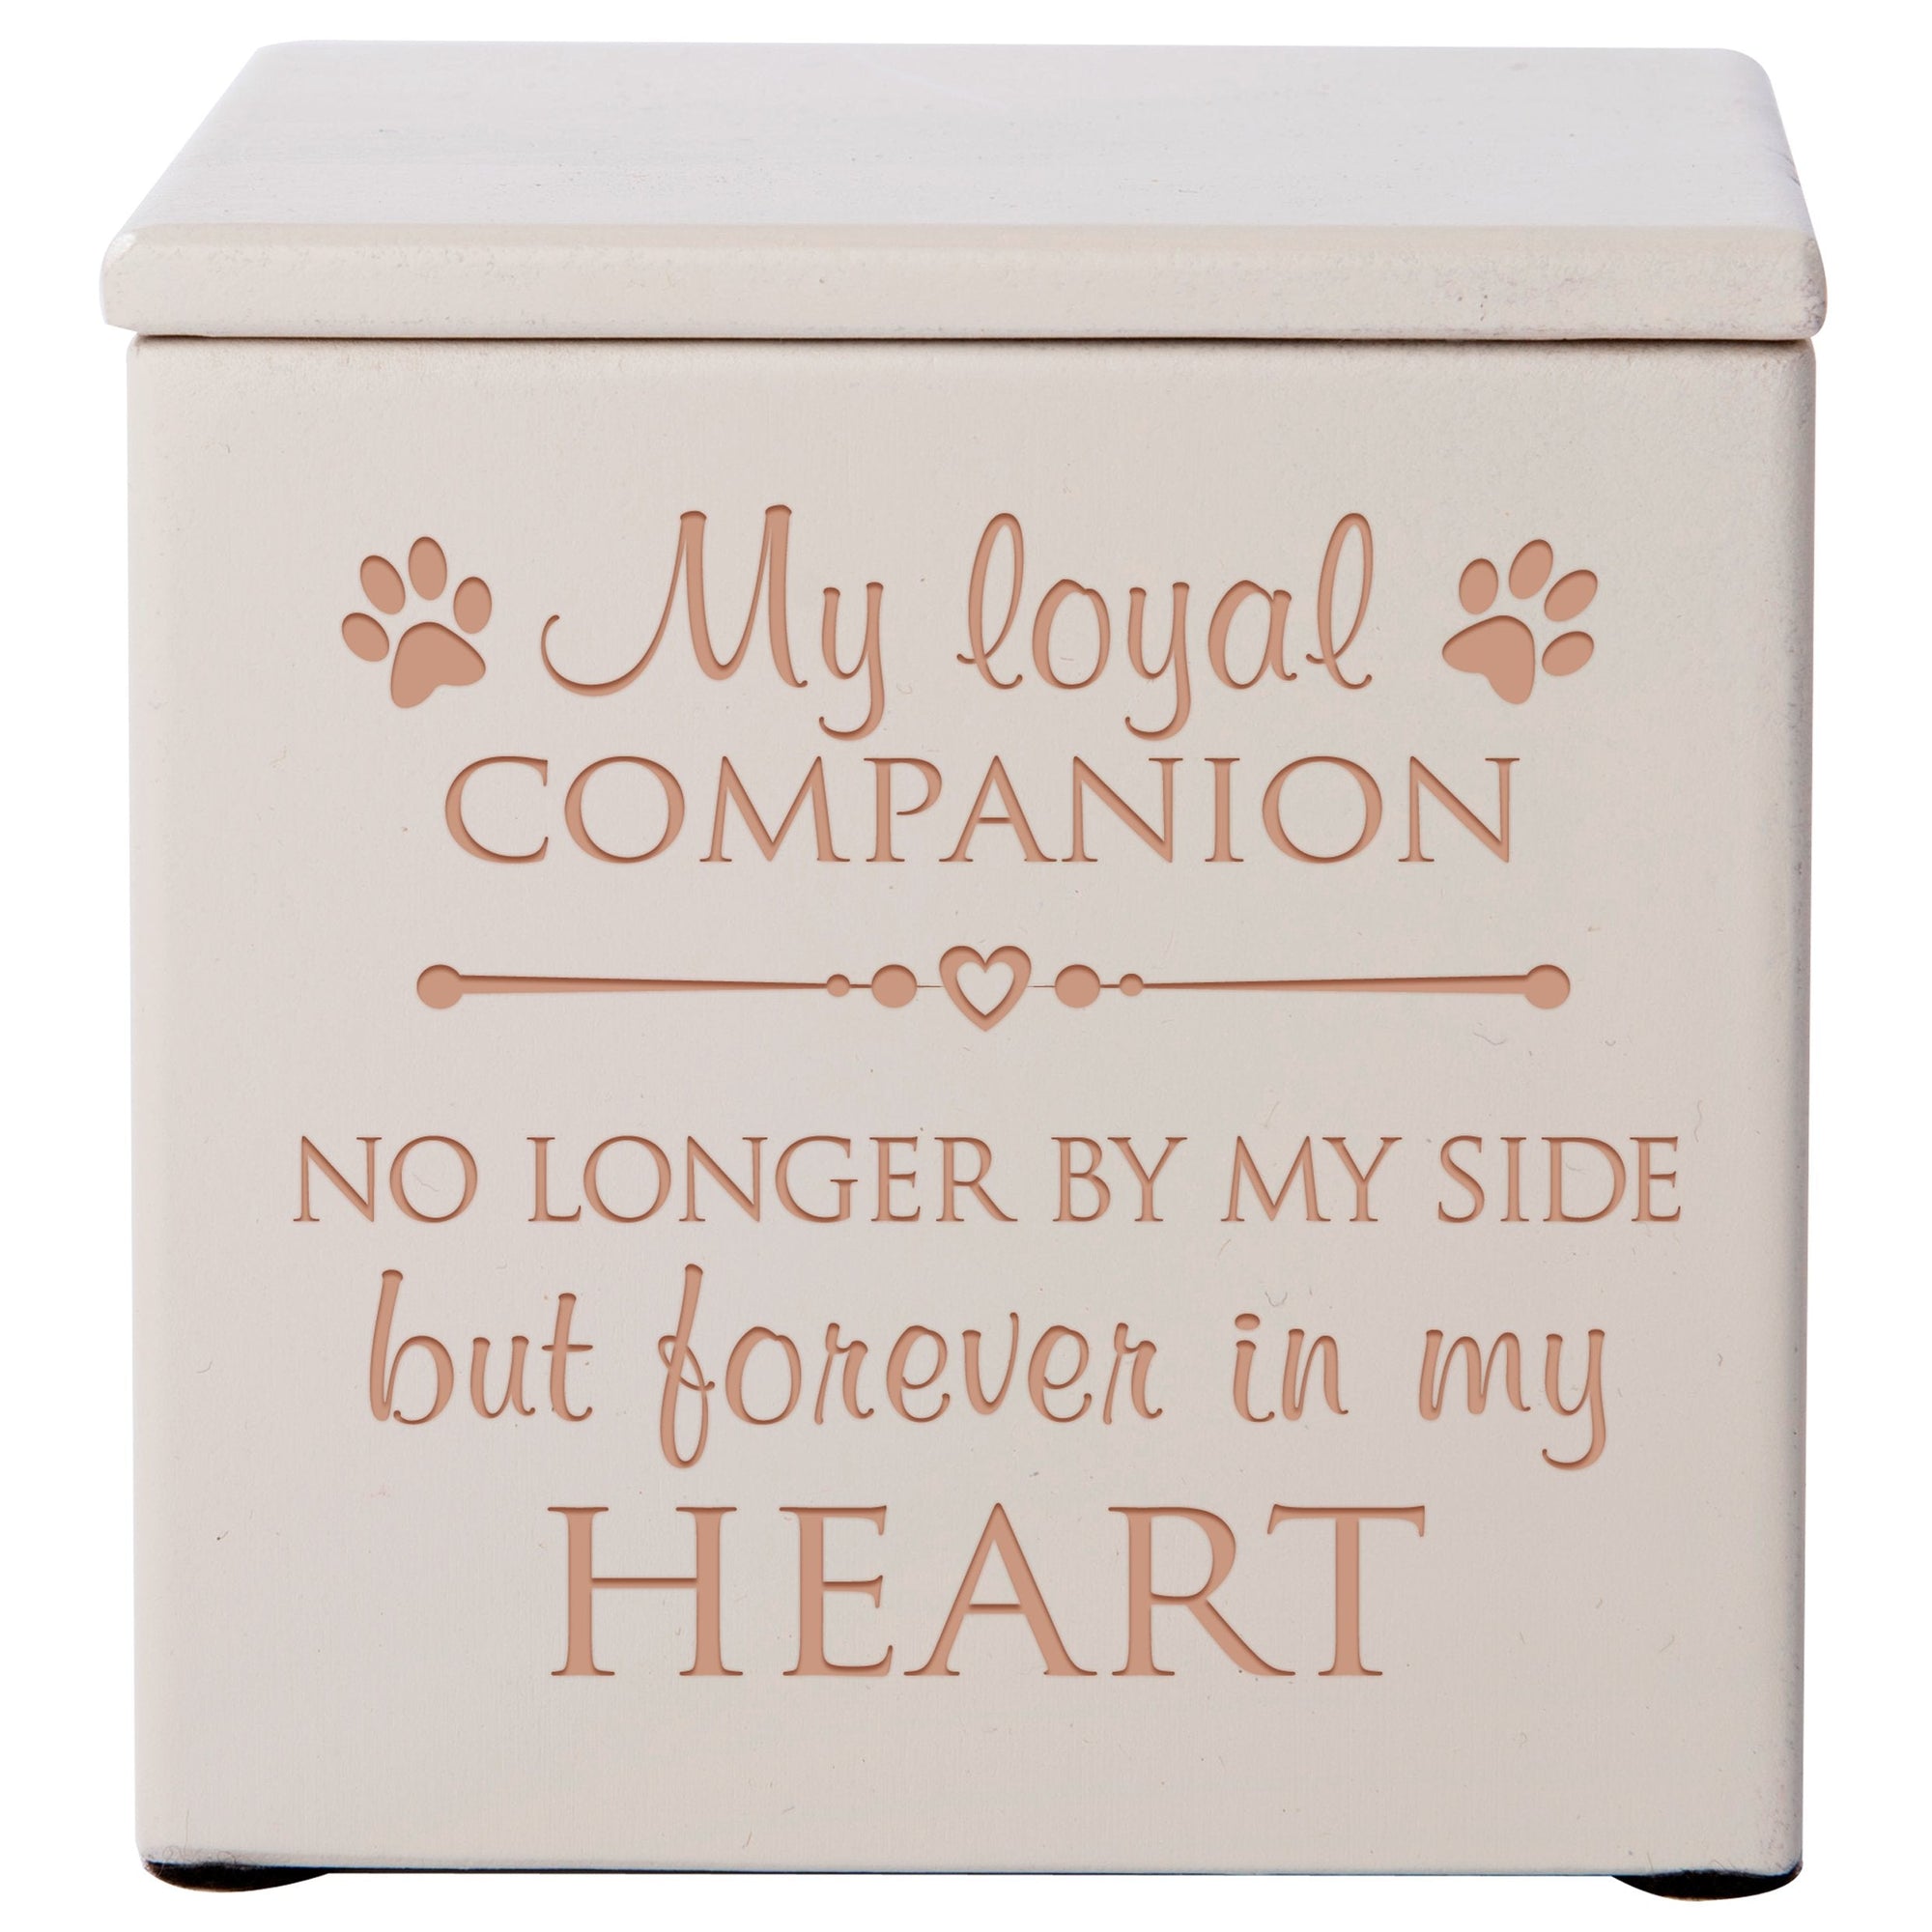 Ivory Pet Memorial 3.5x3.5 Keepsake Urn with phrase "My Loyal Companions"